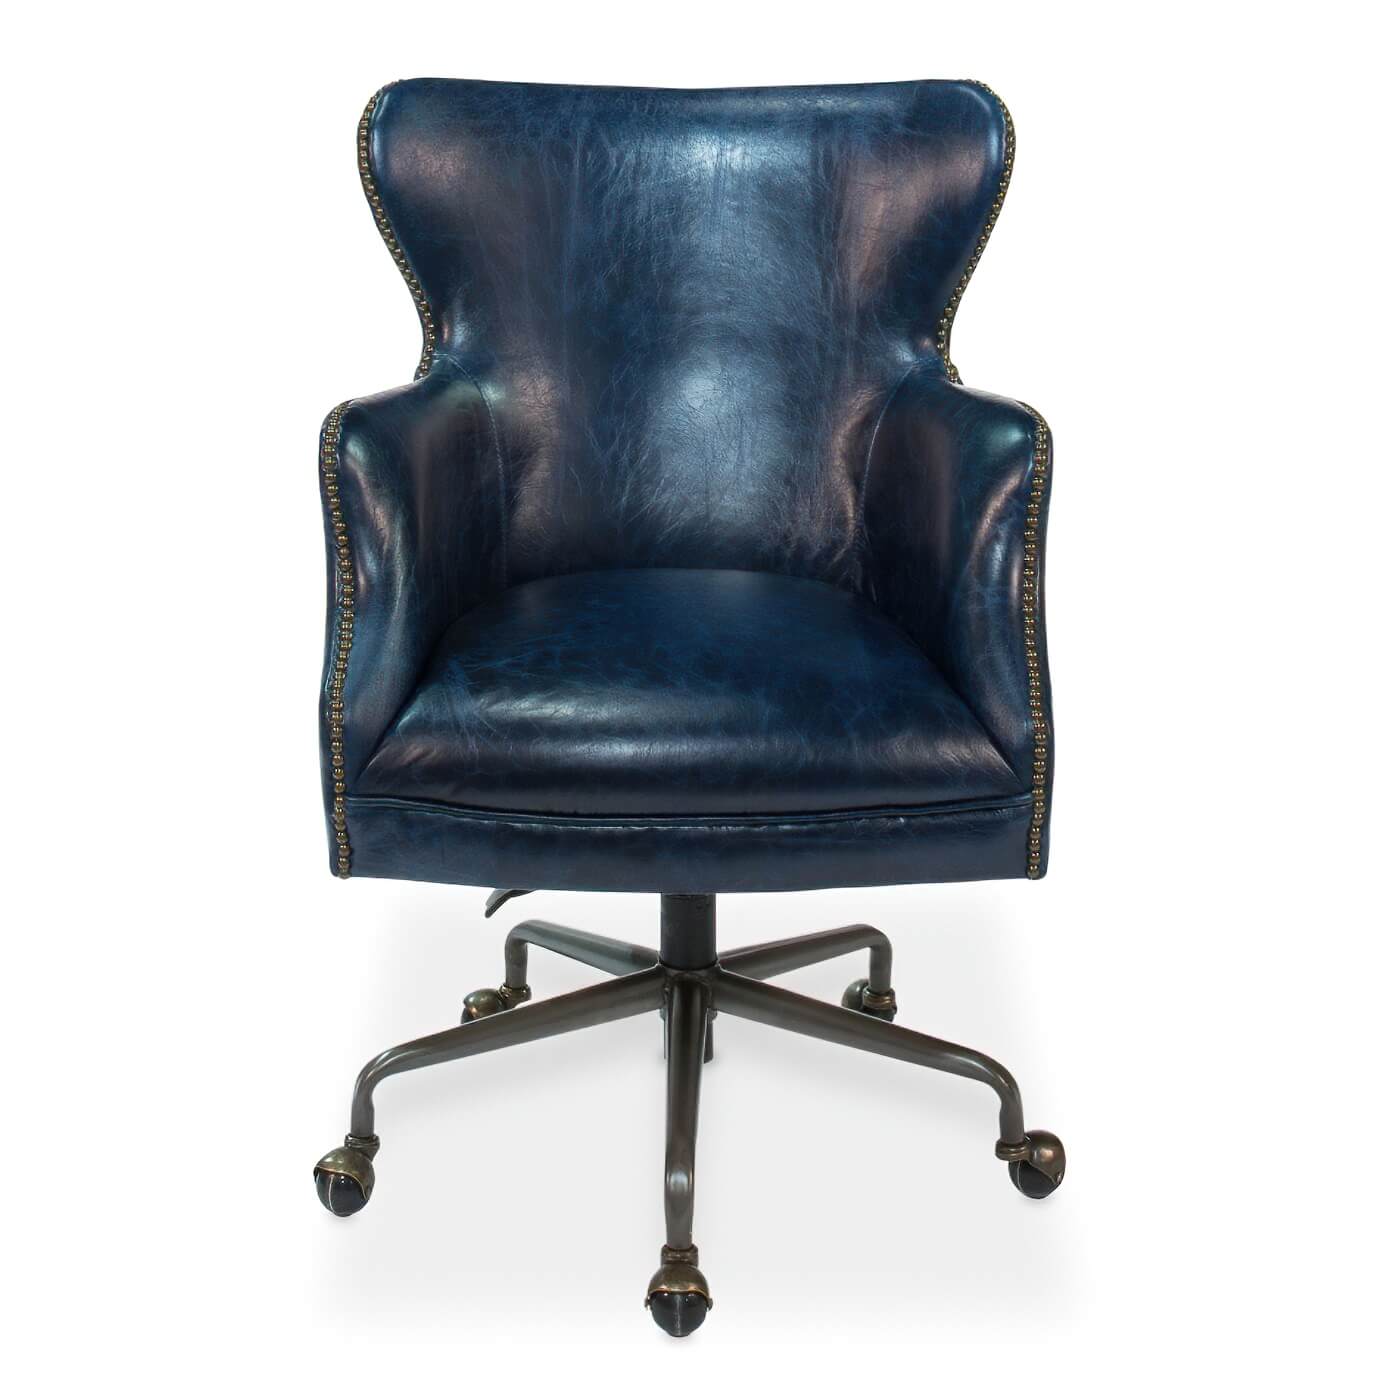 Classic Leather Office Chair - Chateau Blue - English Georgian America